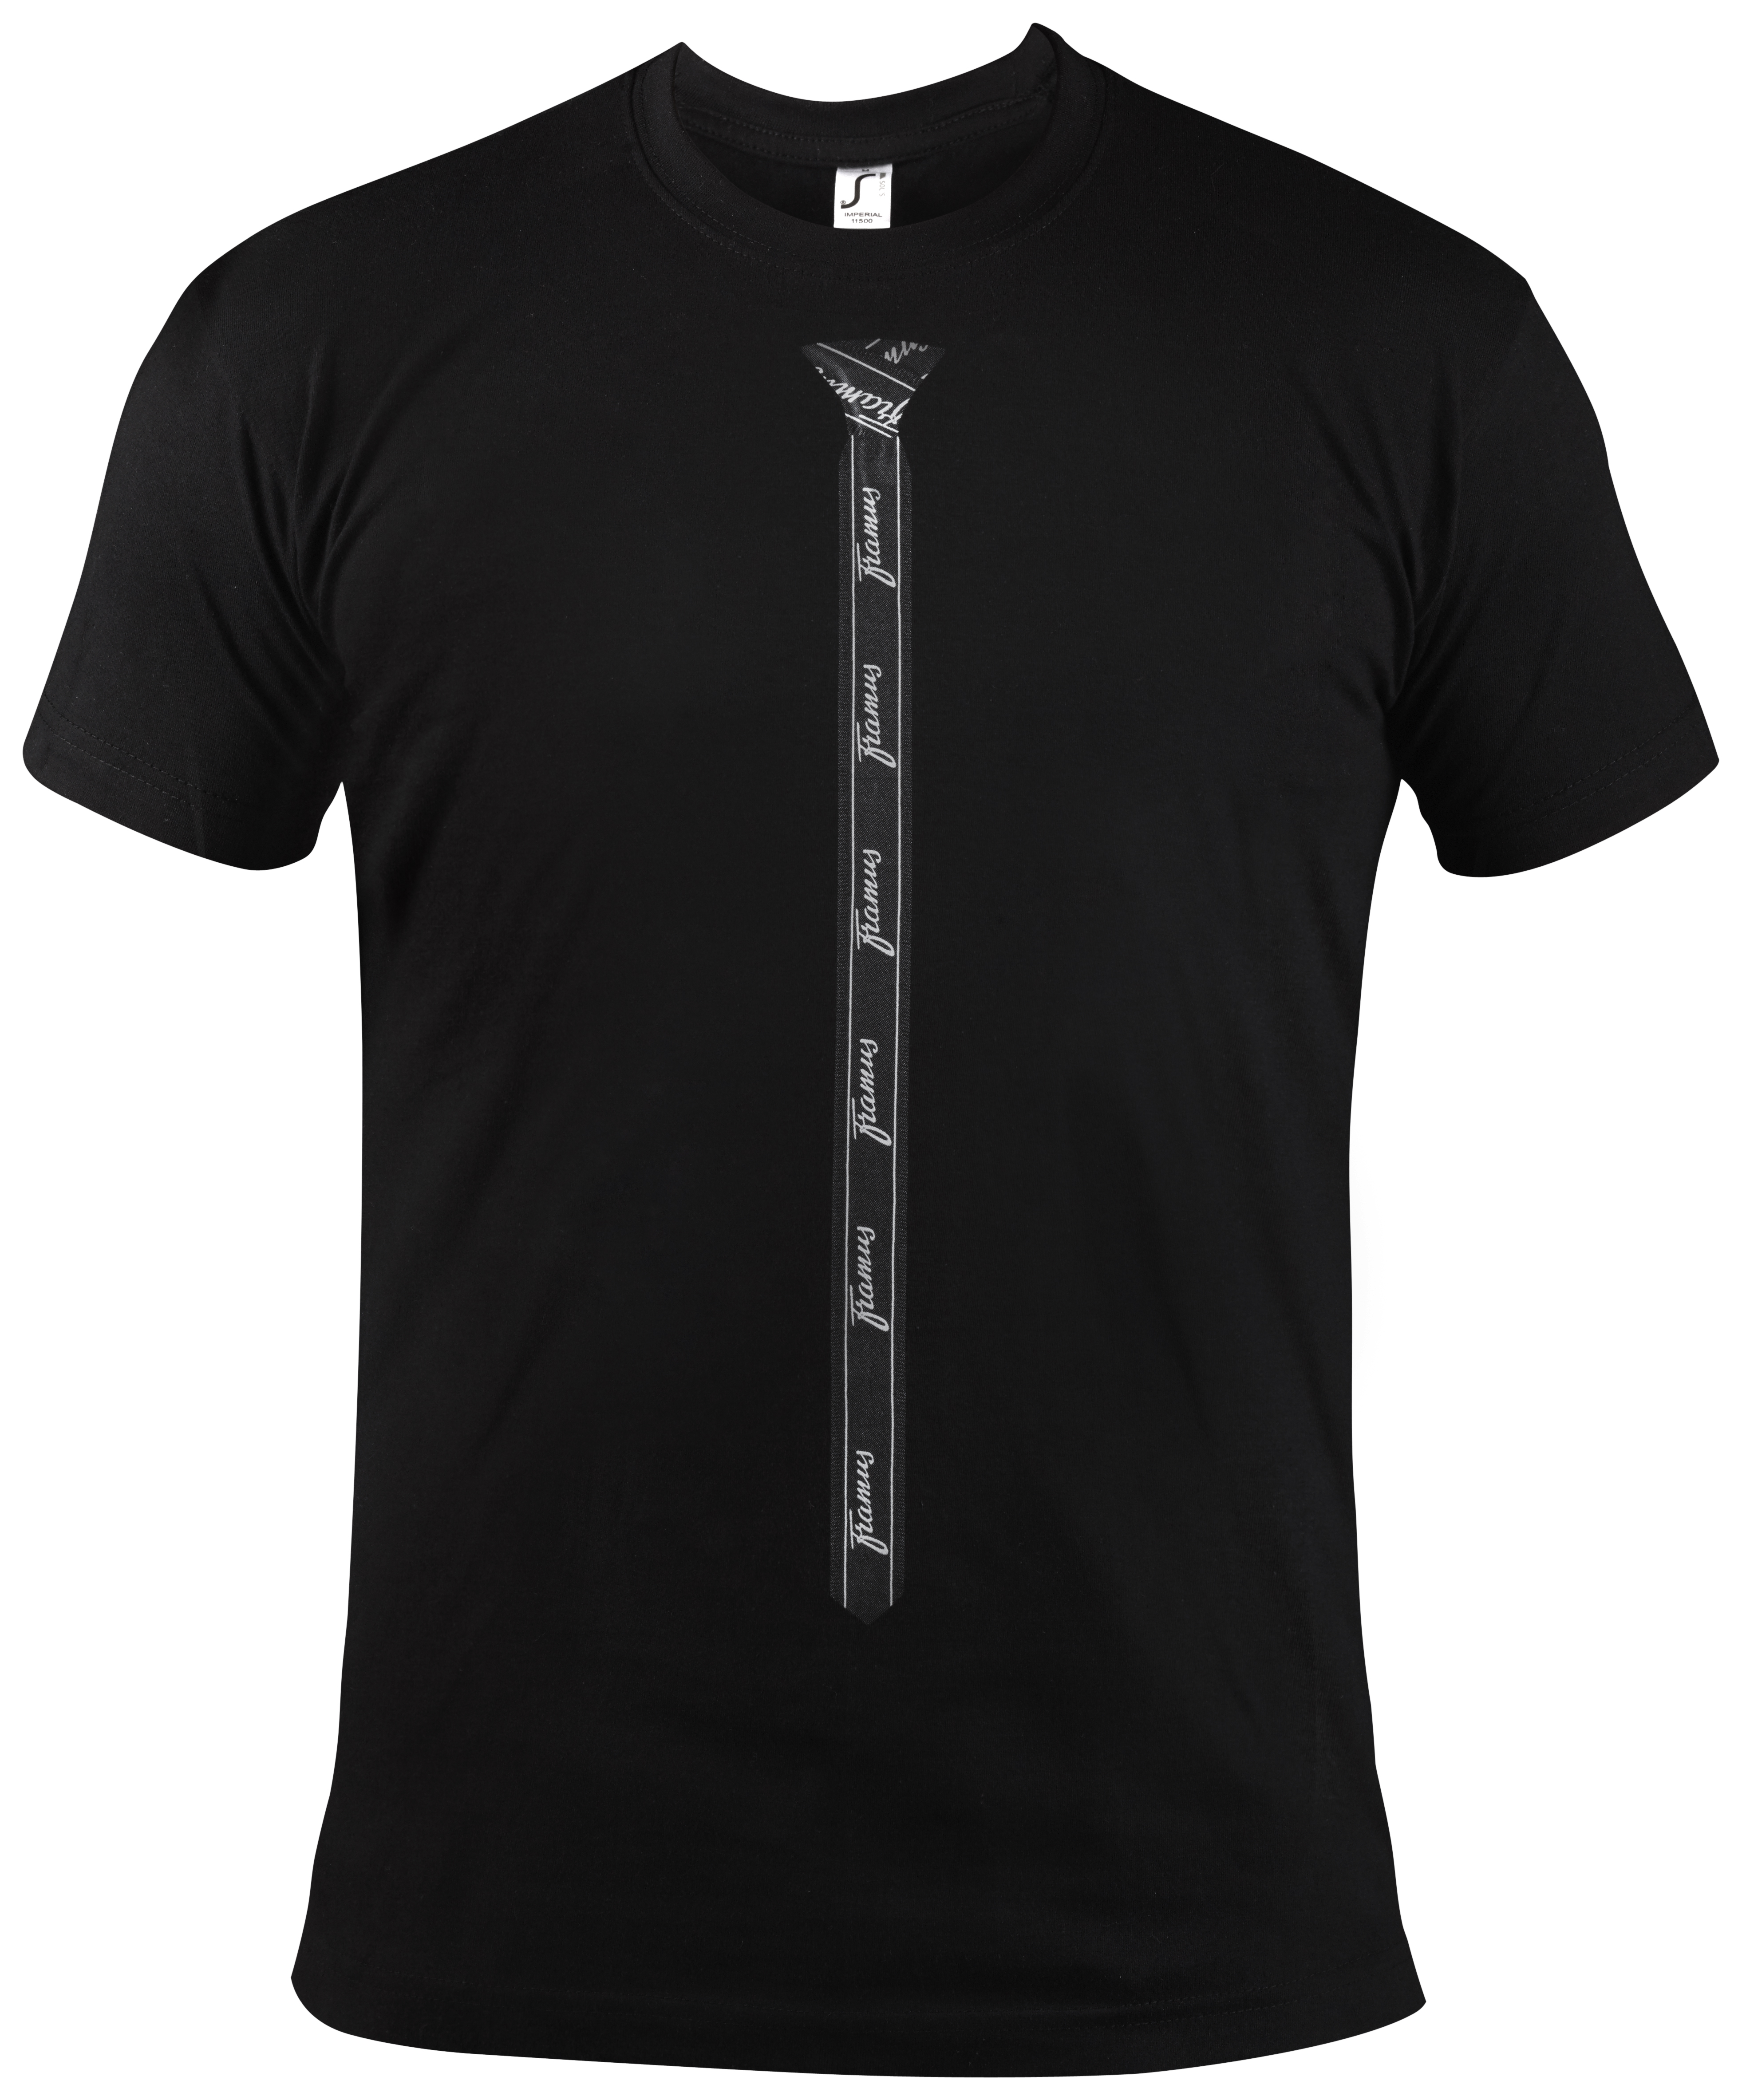 Framus Promo - Tie - T-Shirt - Female / Size M